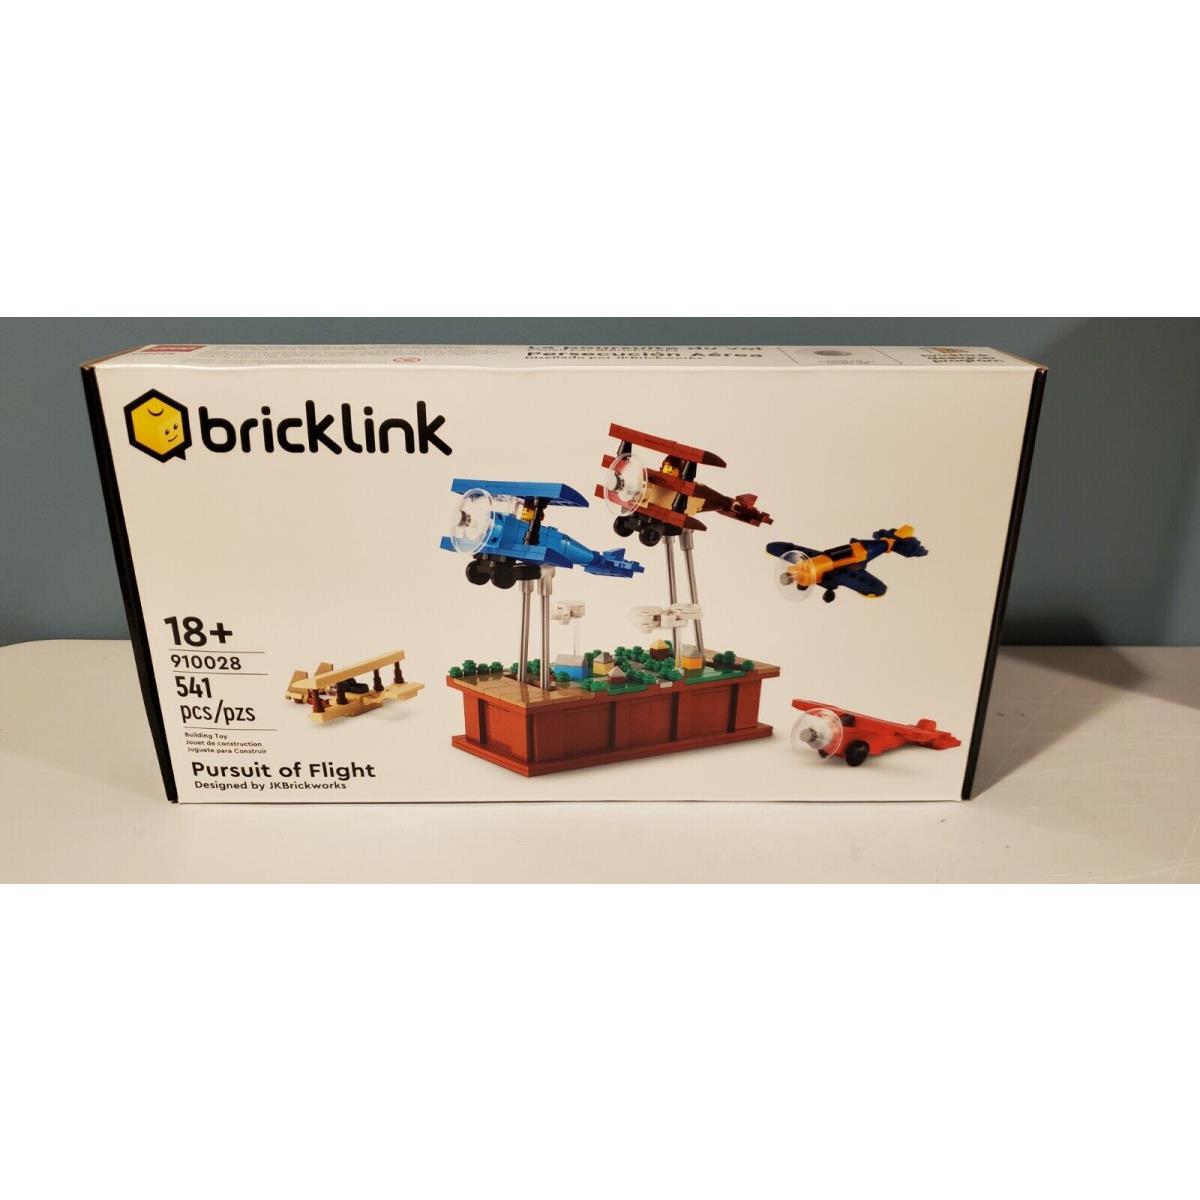 Lego 910028: Pursuit of Flight - Bricklink Designer Program